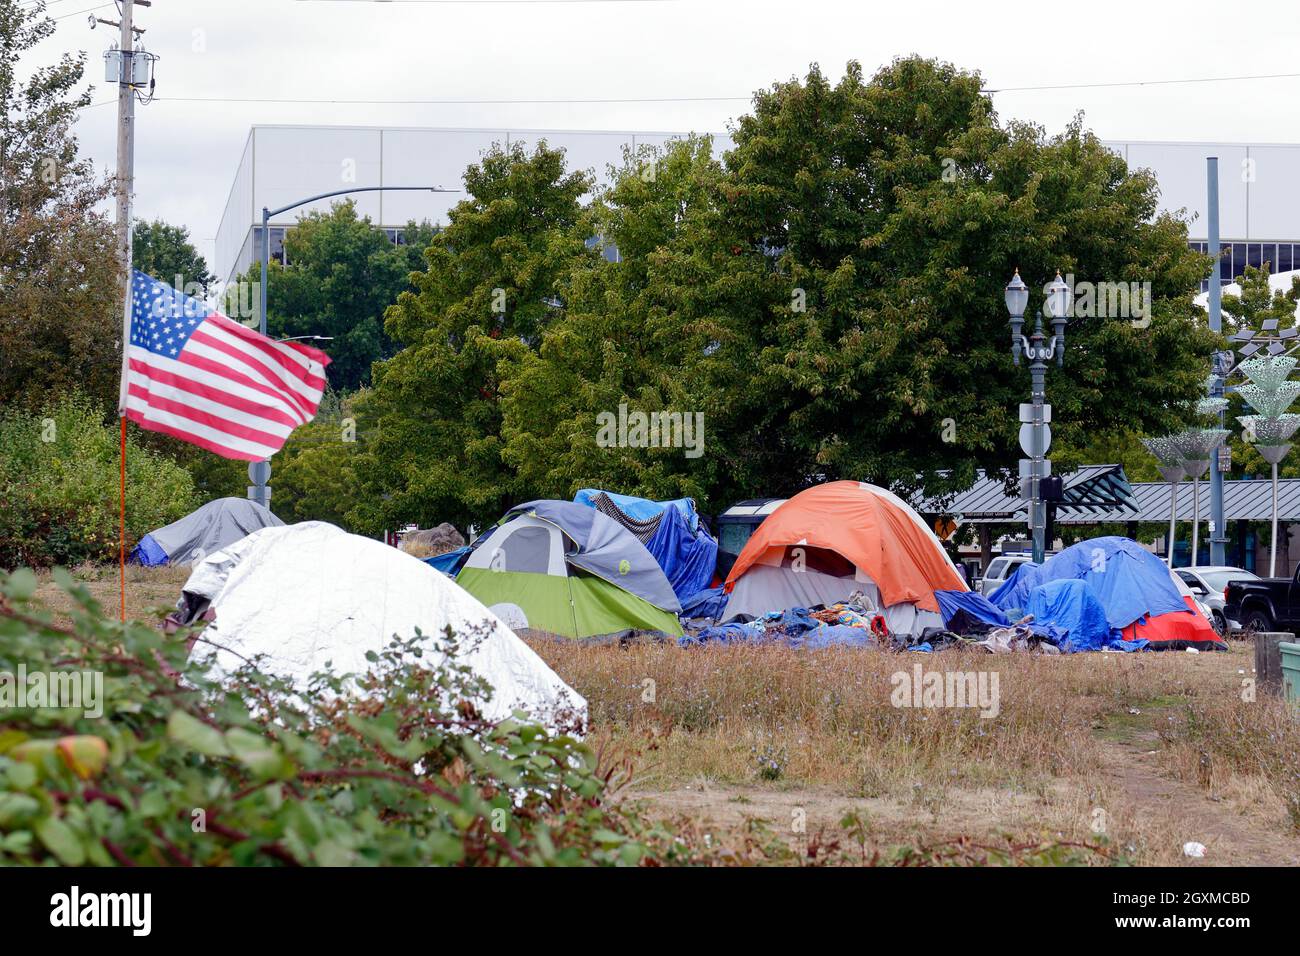 An American flag flies over a houseless, homeless encampment in the Rose Quarter entertainment district of Portland, Oregon. September 2021 Stock Photo